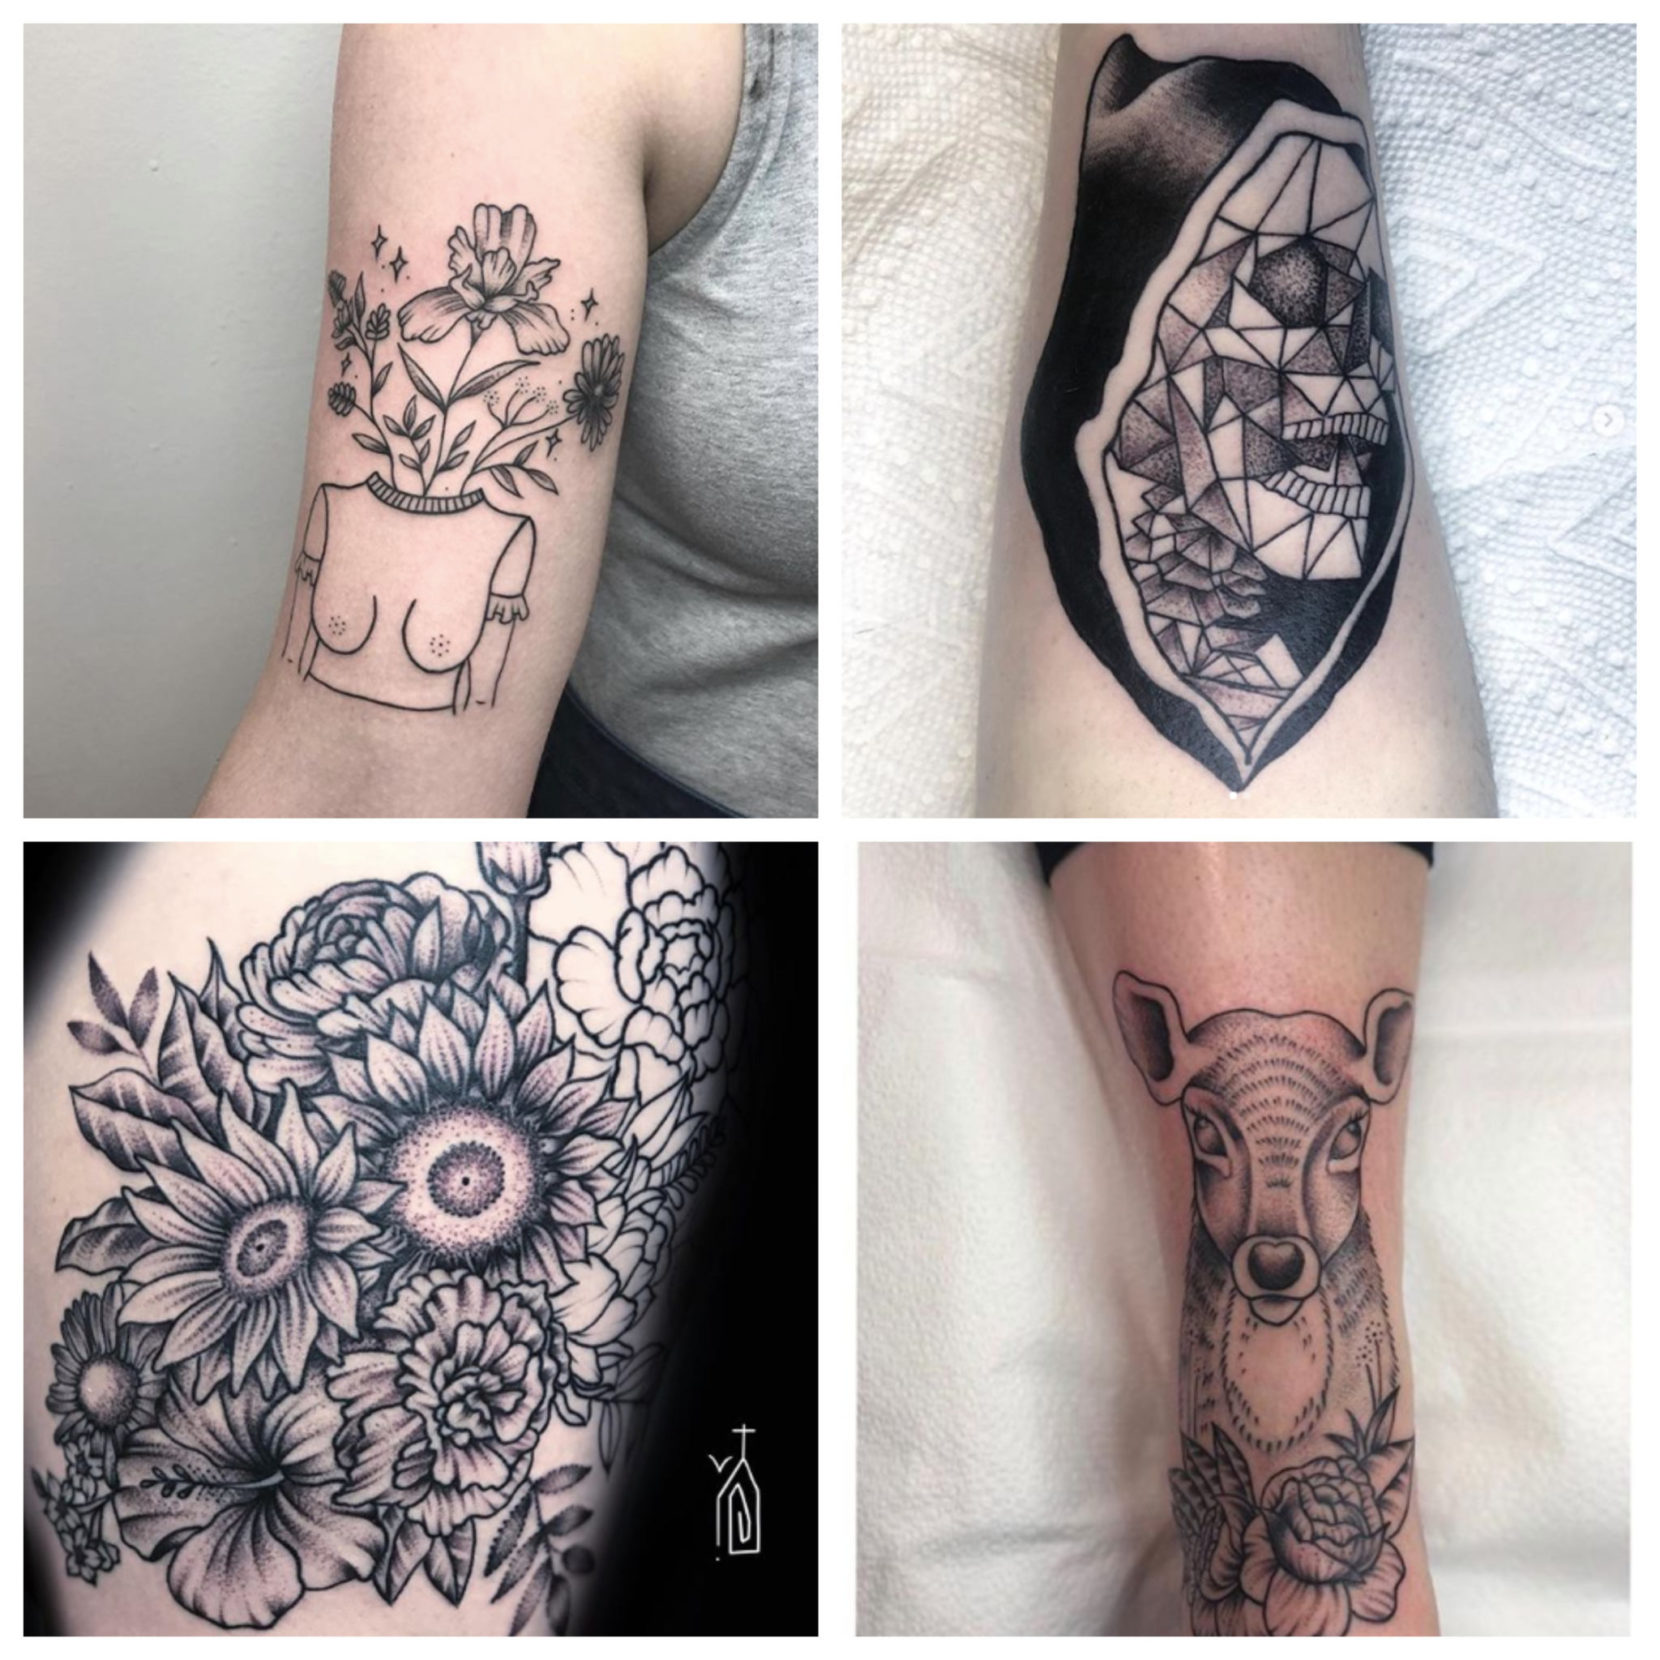 Fine Line Tattoo Artist Creates Detailed Black Ink Tattoo Art